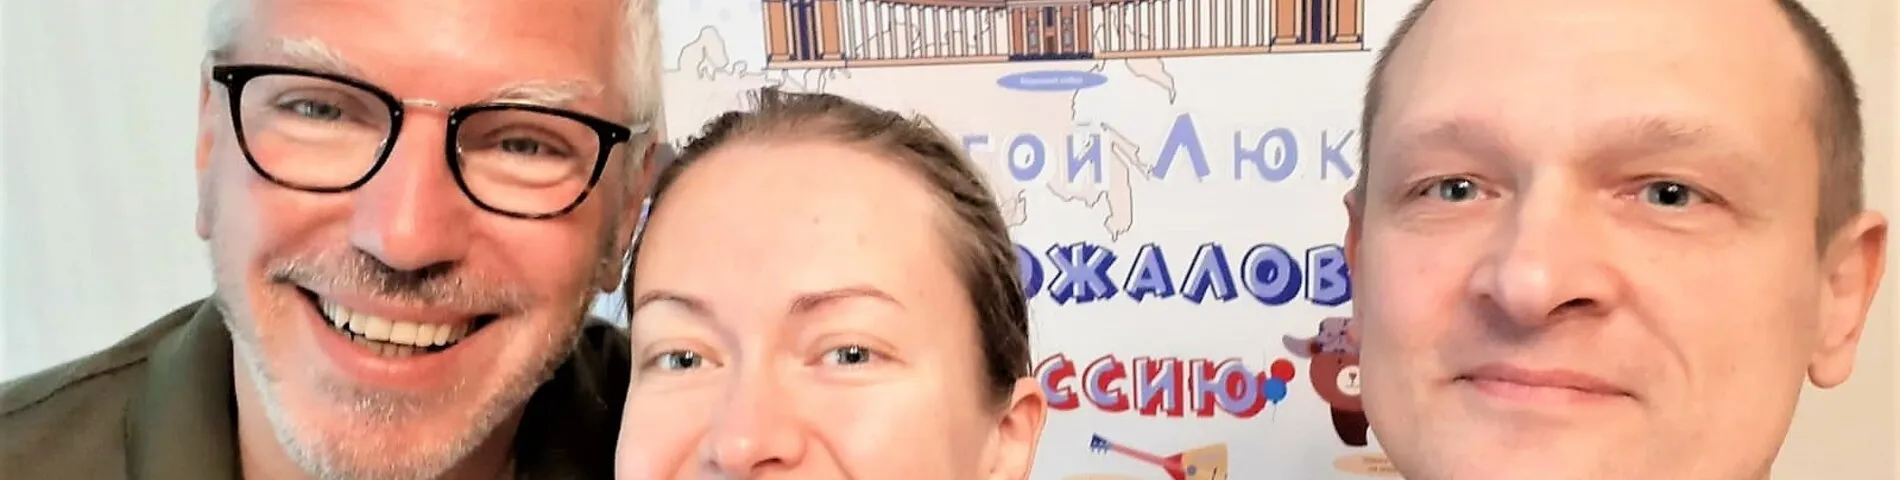 Ruslingua Russian Language School kép 1